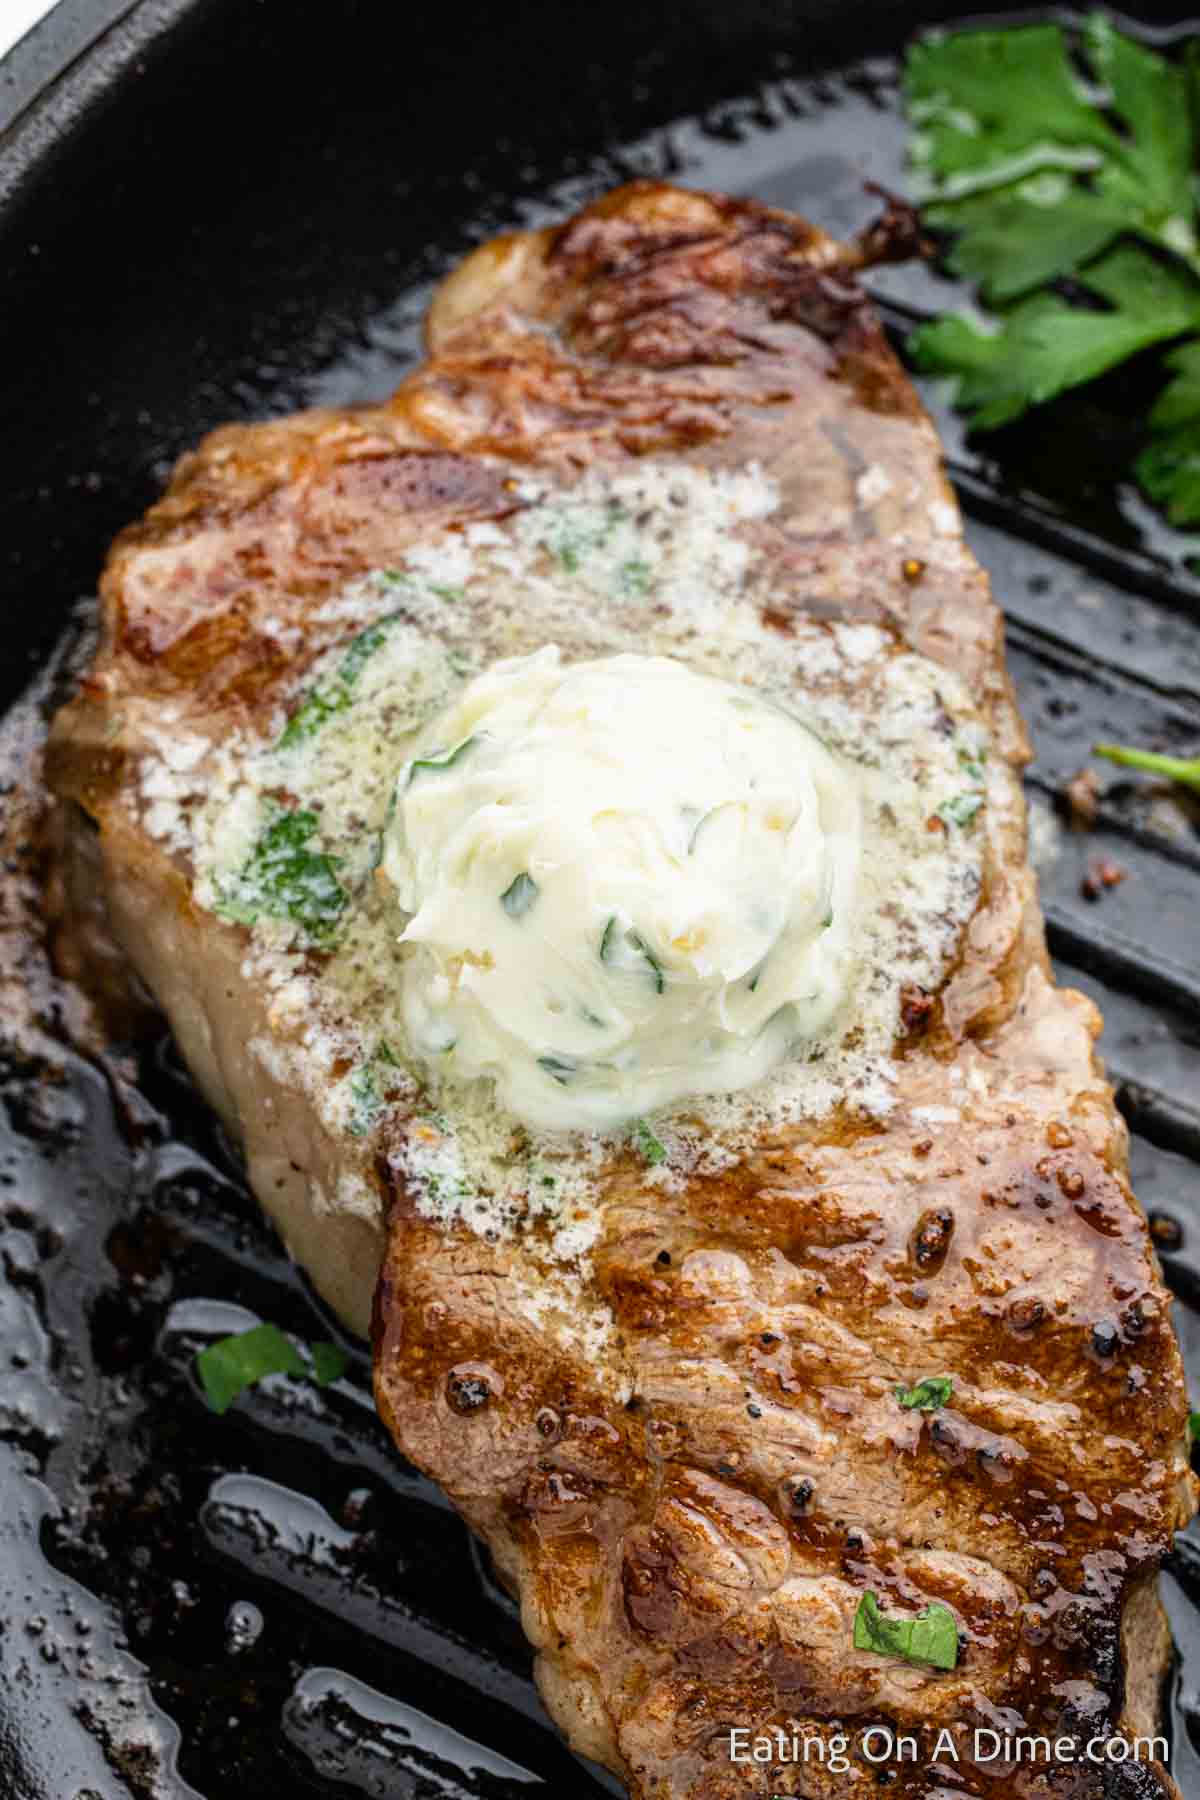 Garlic butter topped on a steak